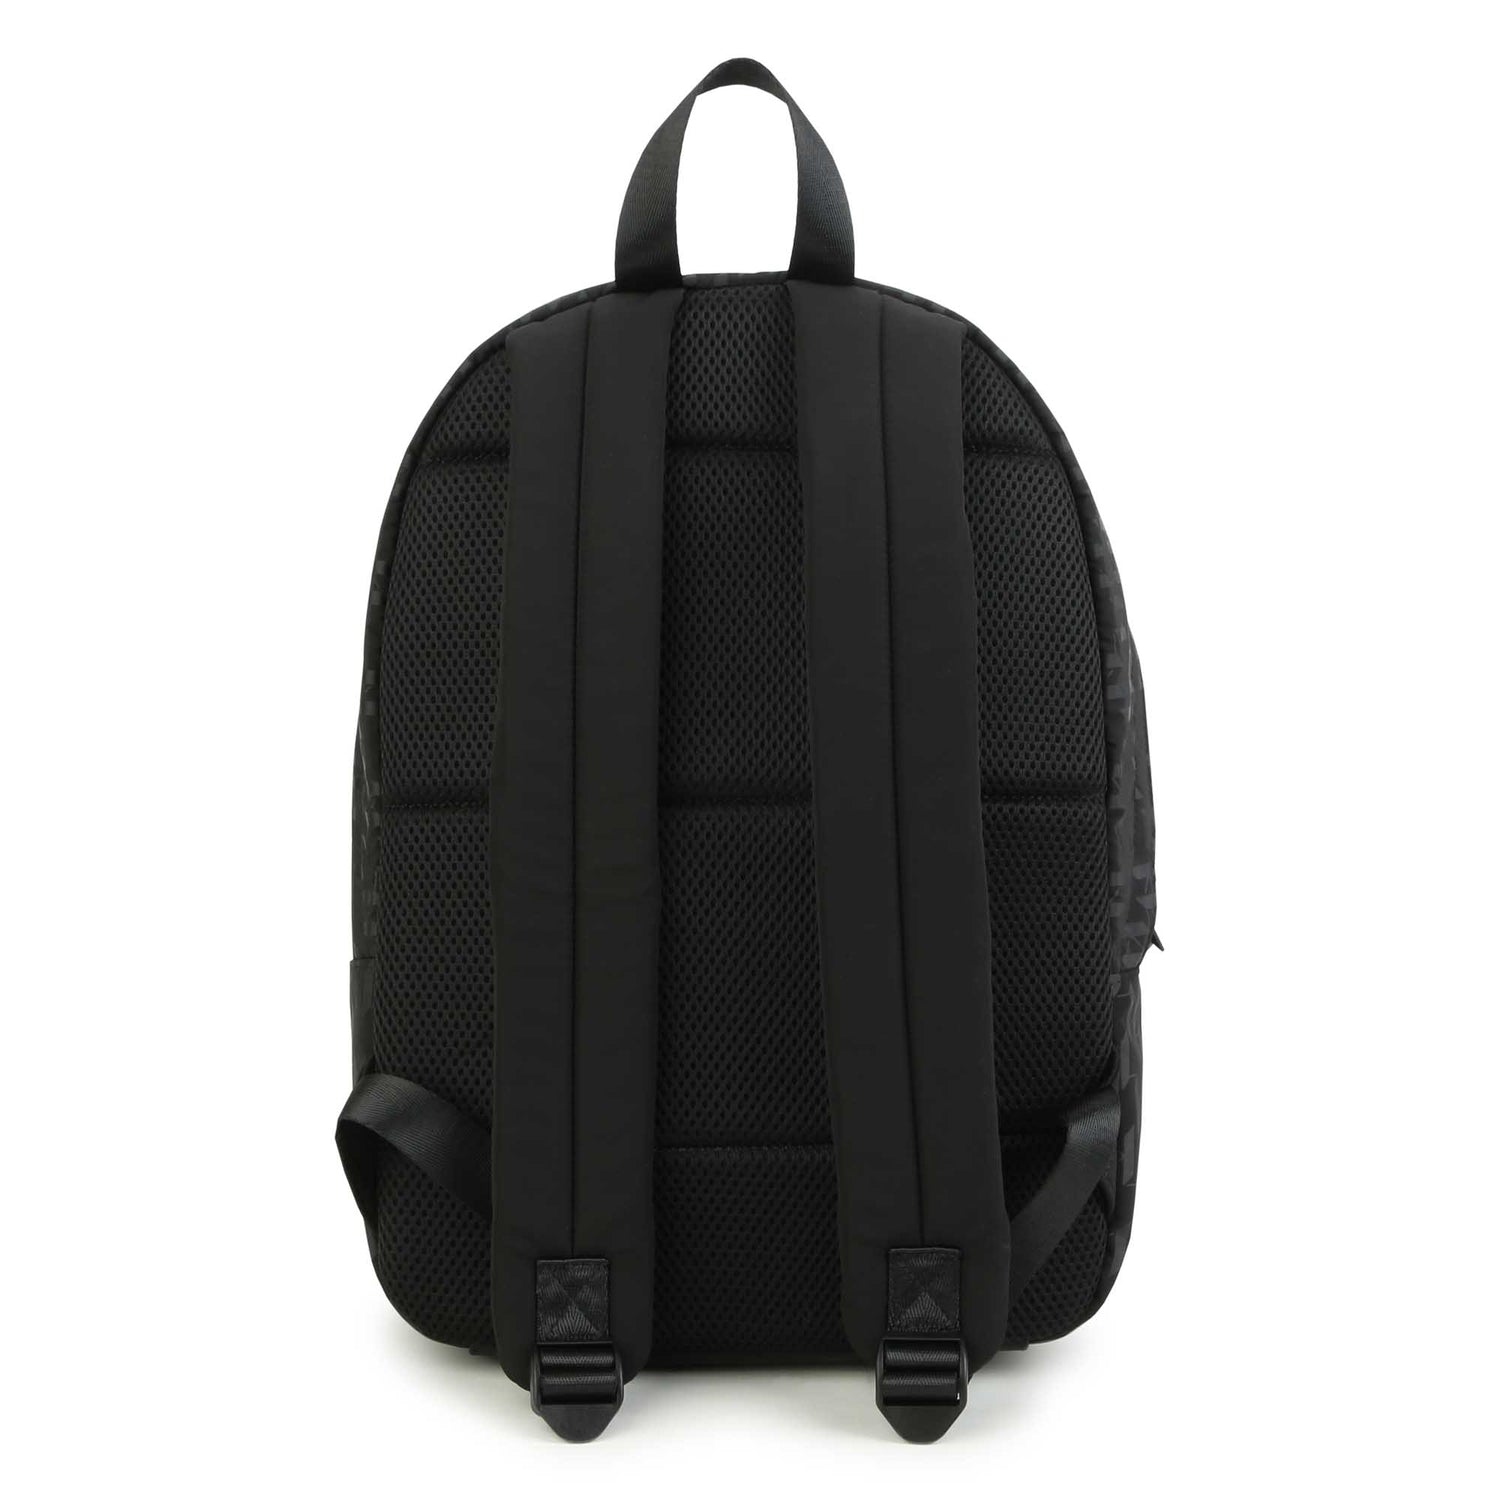 Karl Lagerfeld Black Allover Logo and Mascot Print Backpack